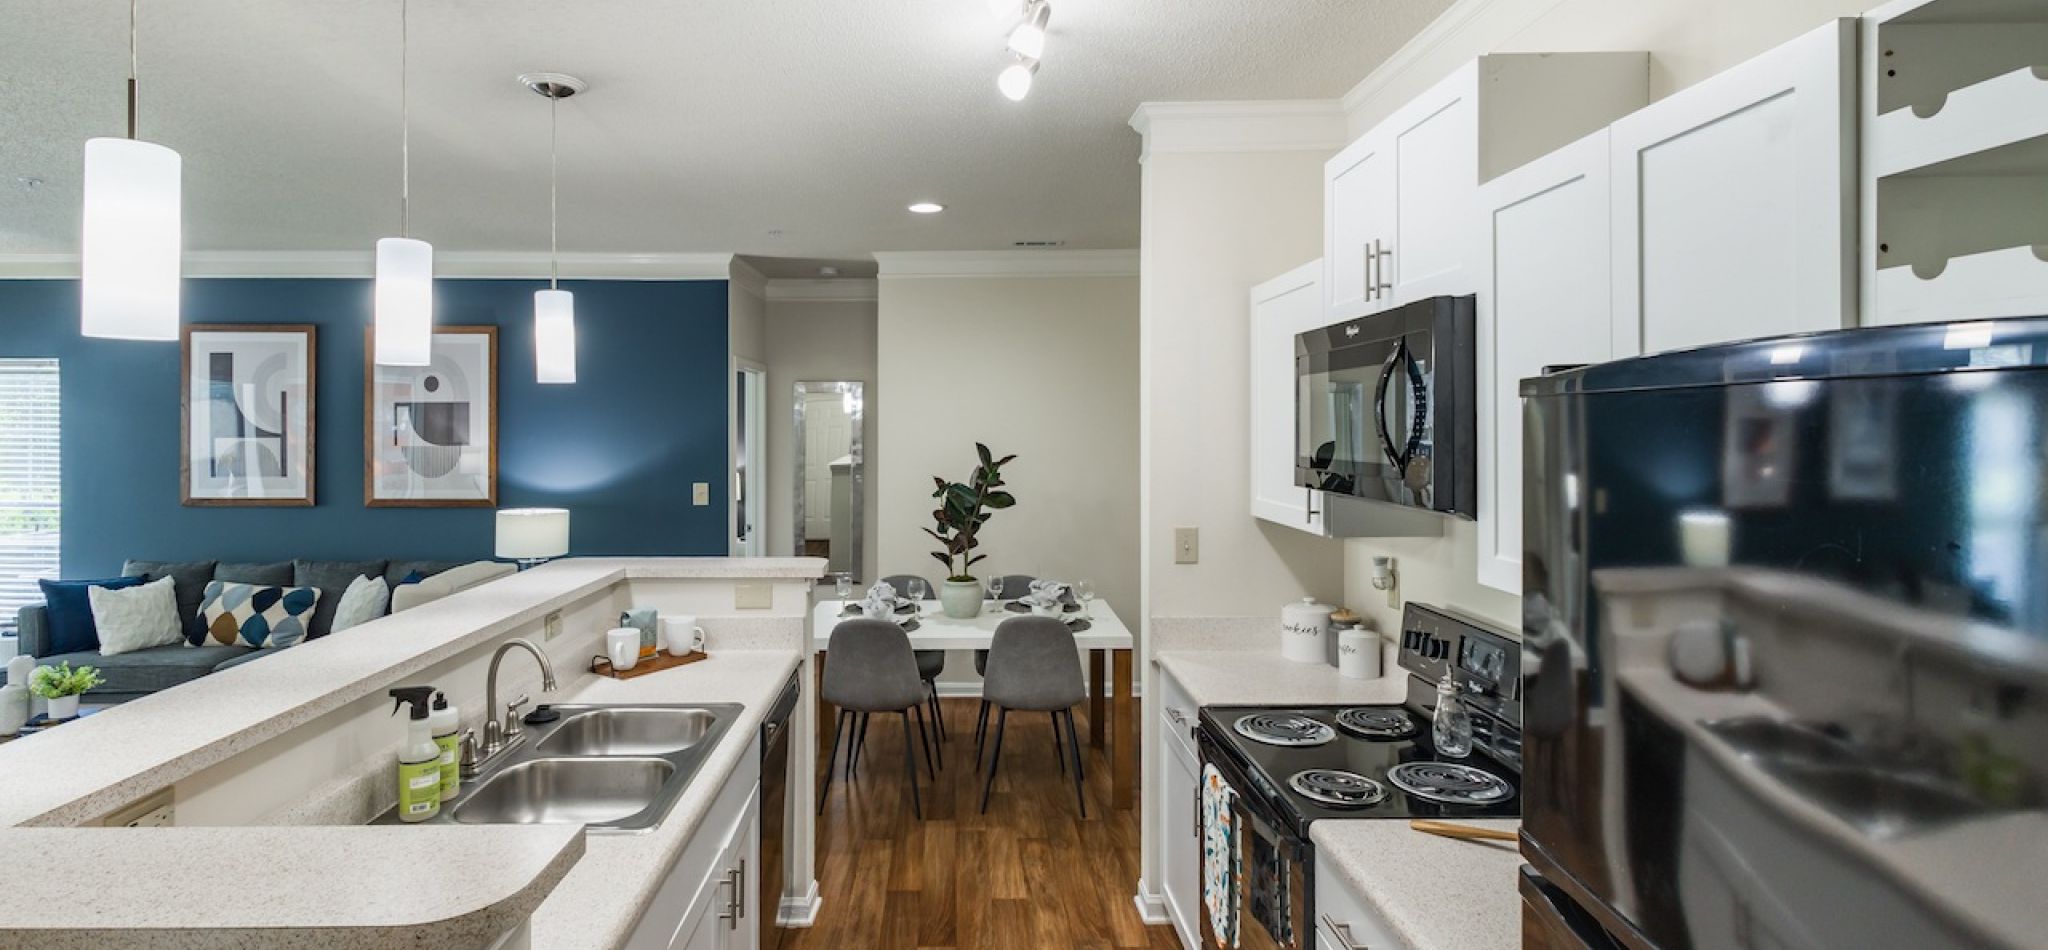 Hawthorne at Main apartment kitchen interior with kitchen island, sleek black appliances, and hardwood inspired flooring